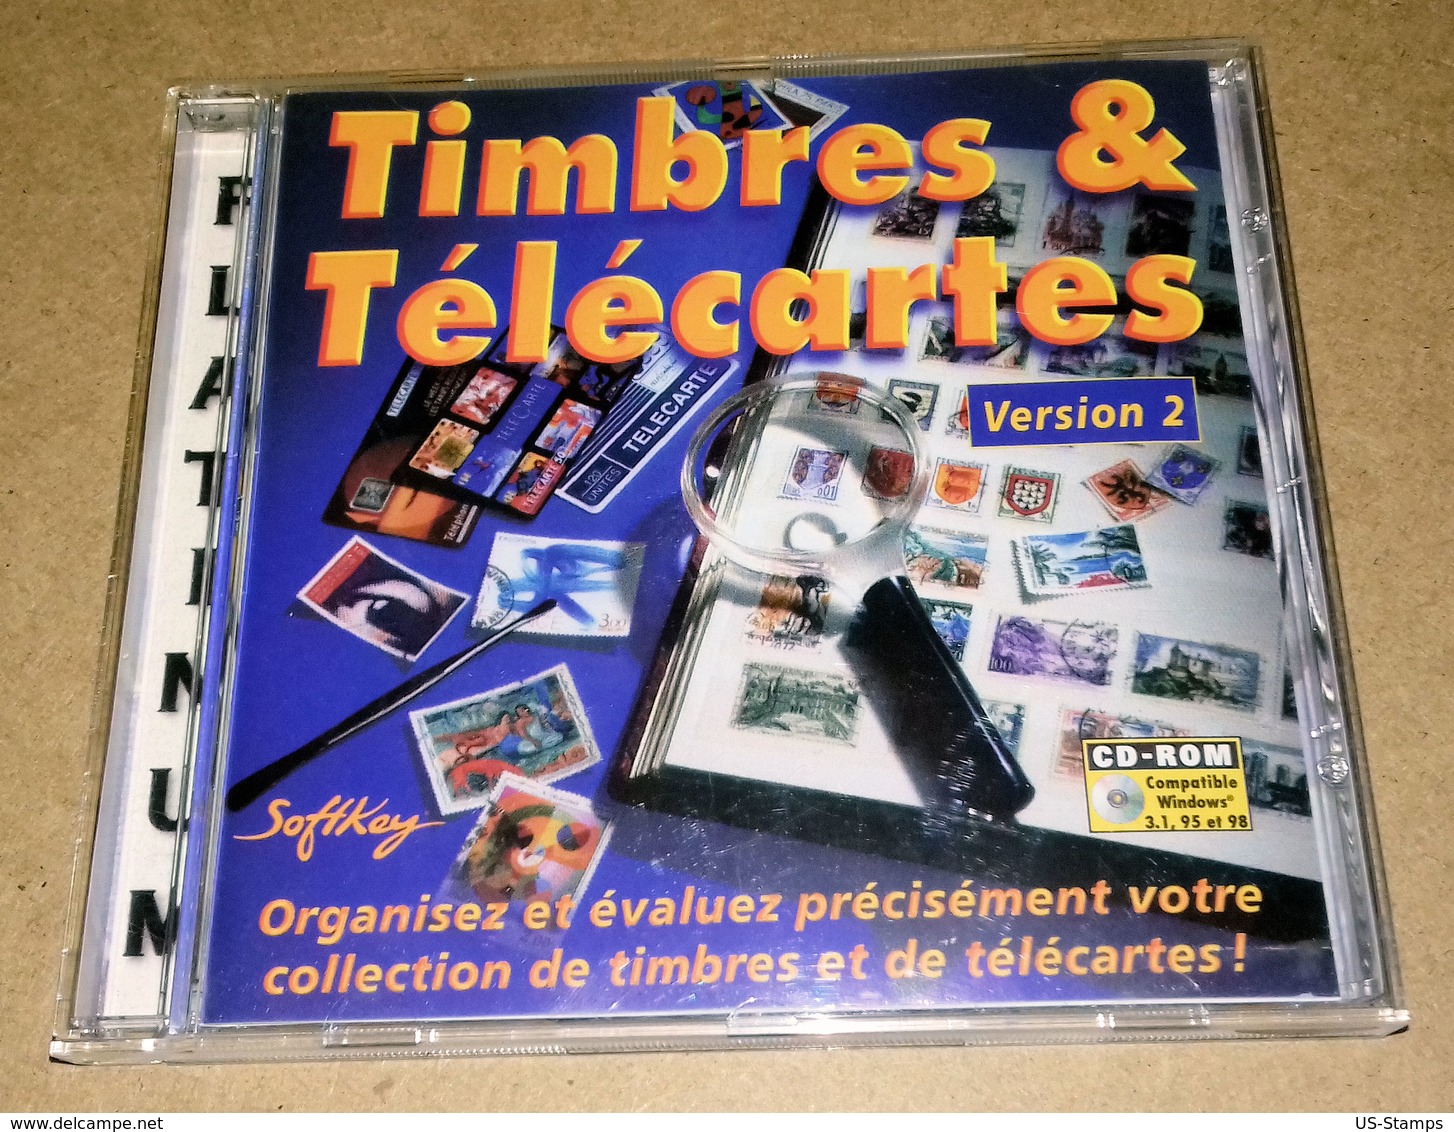 CD Timbres Et Télécartes Version 2 (SoftKey) - Francese